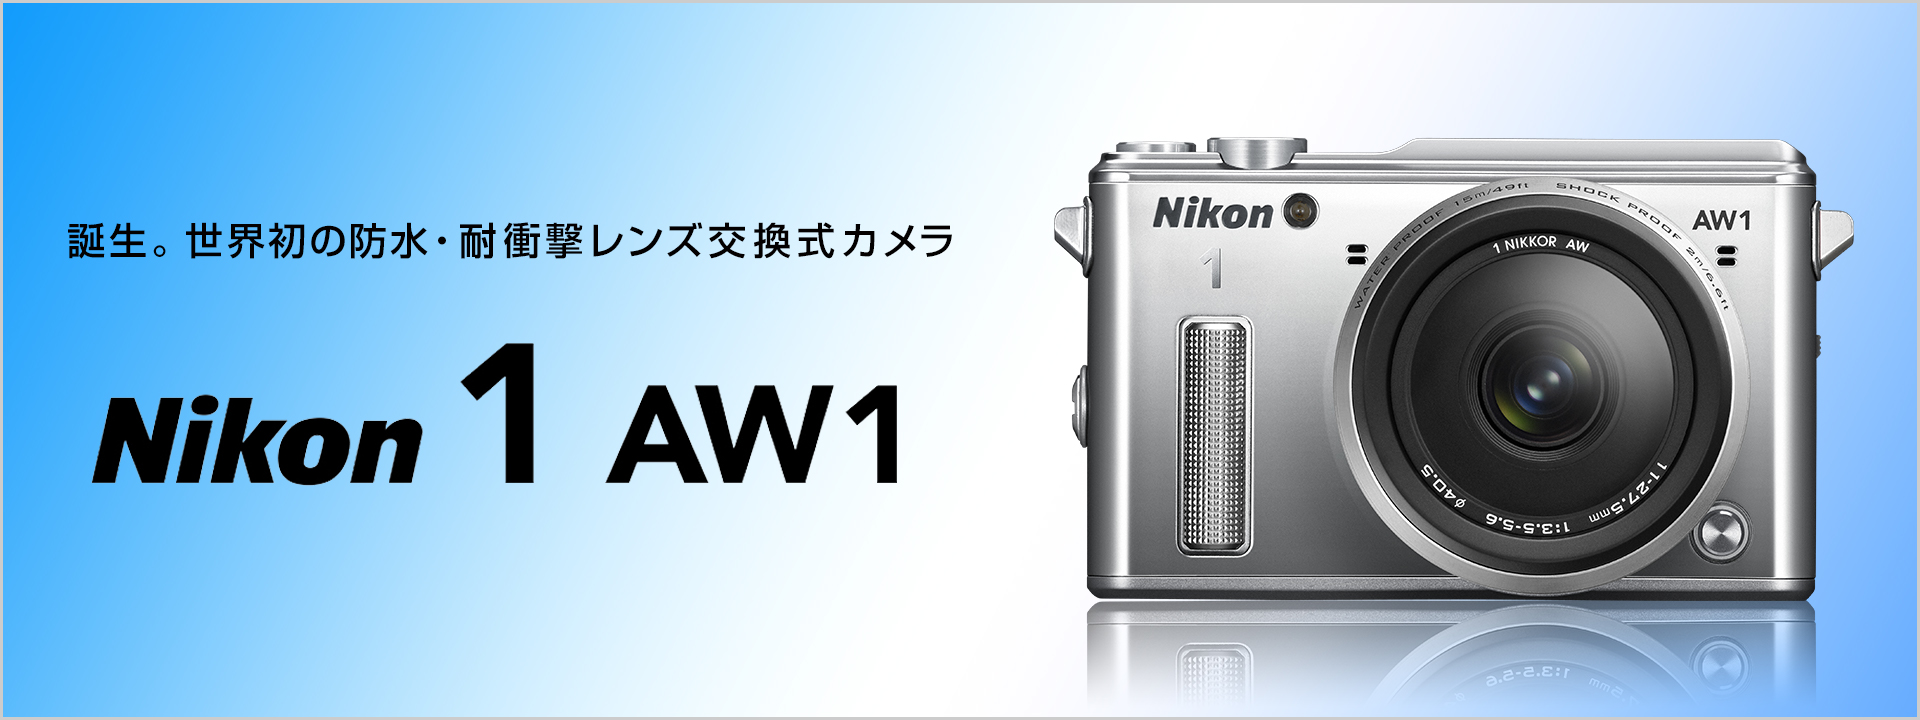 NIKON 1 AW1 防水ズームレンズキット オプション品セット ニコン